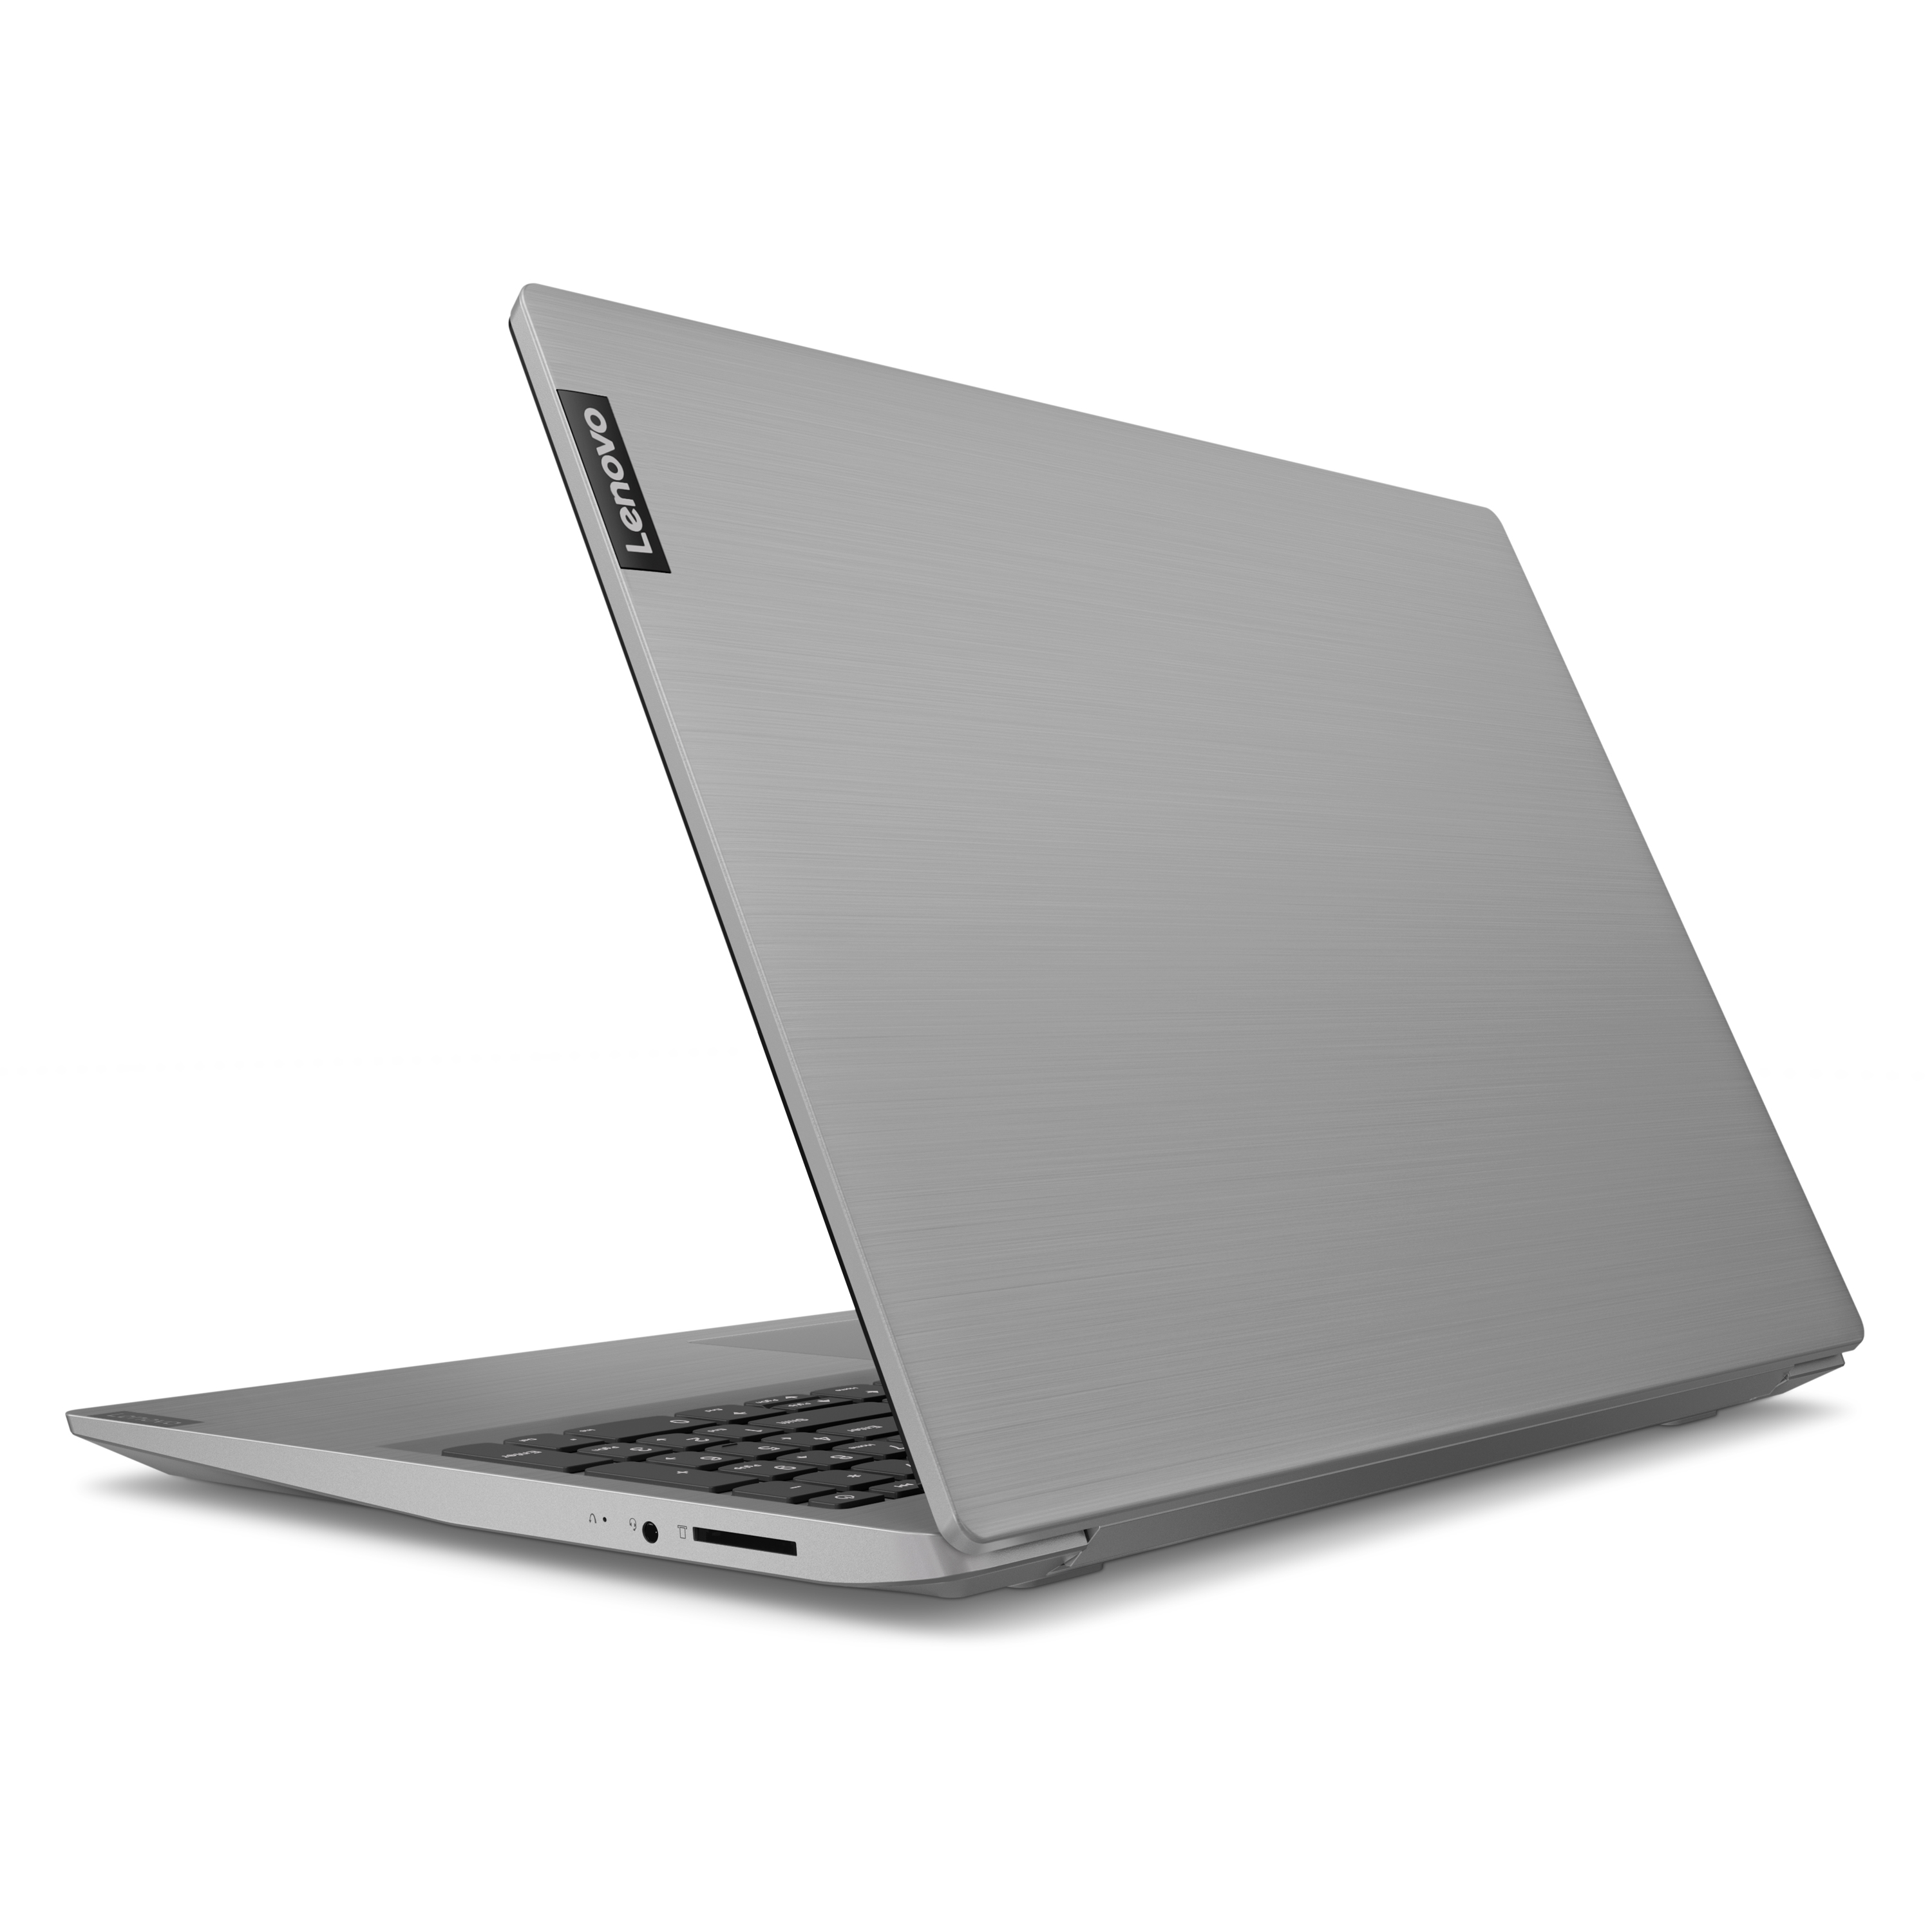 Lenovo ideapad S145 15.6" Laptop, Intel Celeron 4205U Dual-Core Processor, 4GB Memory, 128GB Solid State Drive, Windows 10 - Grey - 81MV00FGUS - image 3 of 17